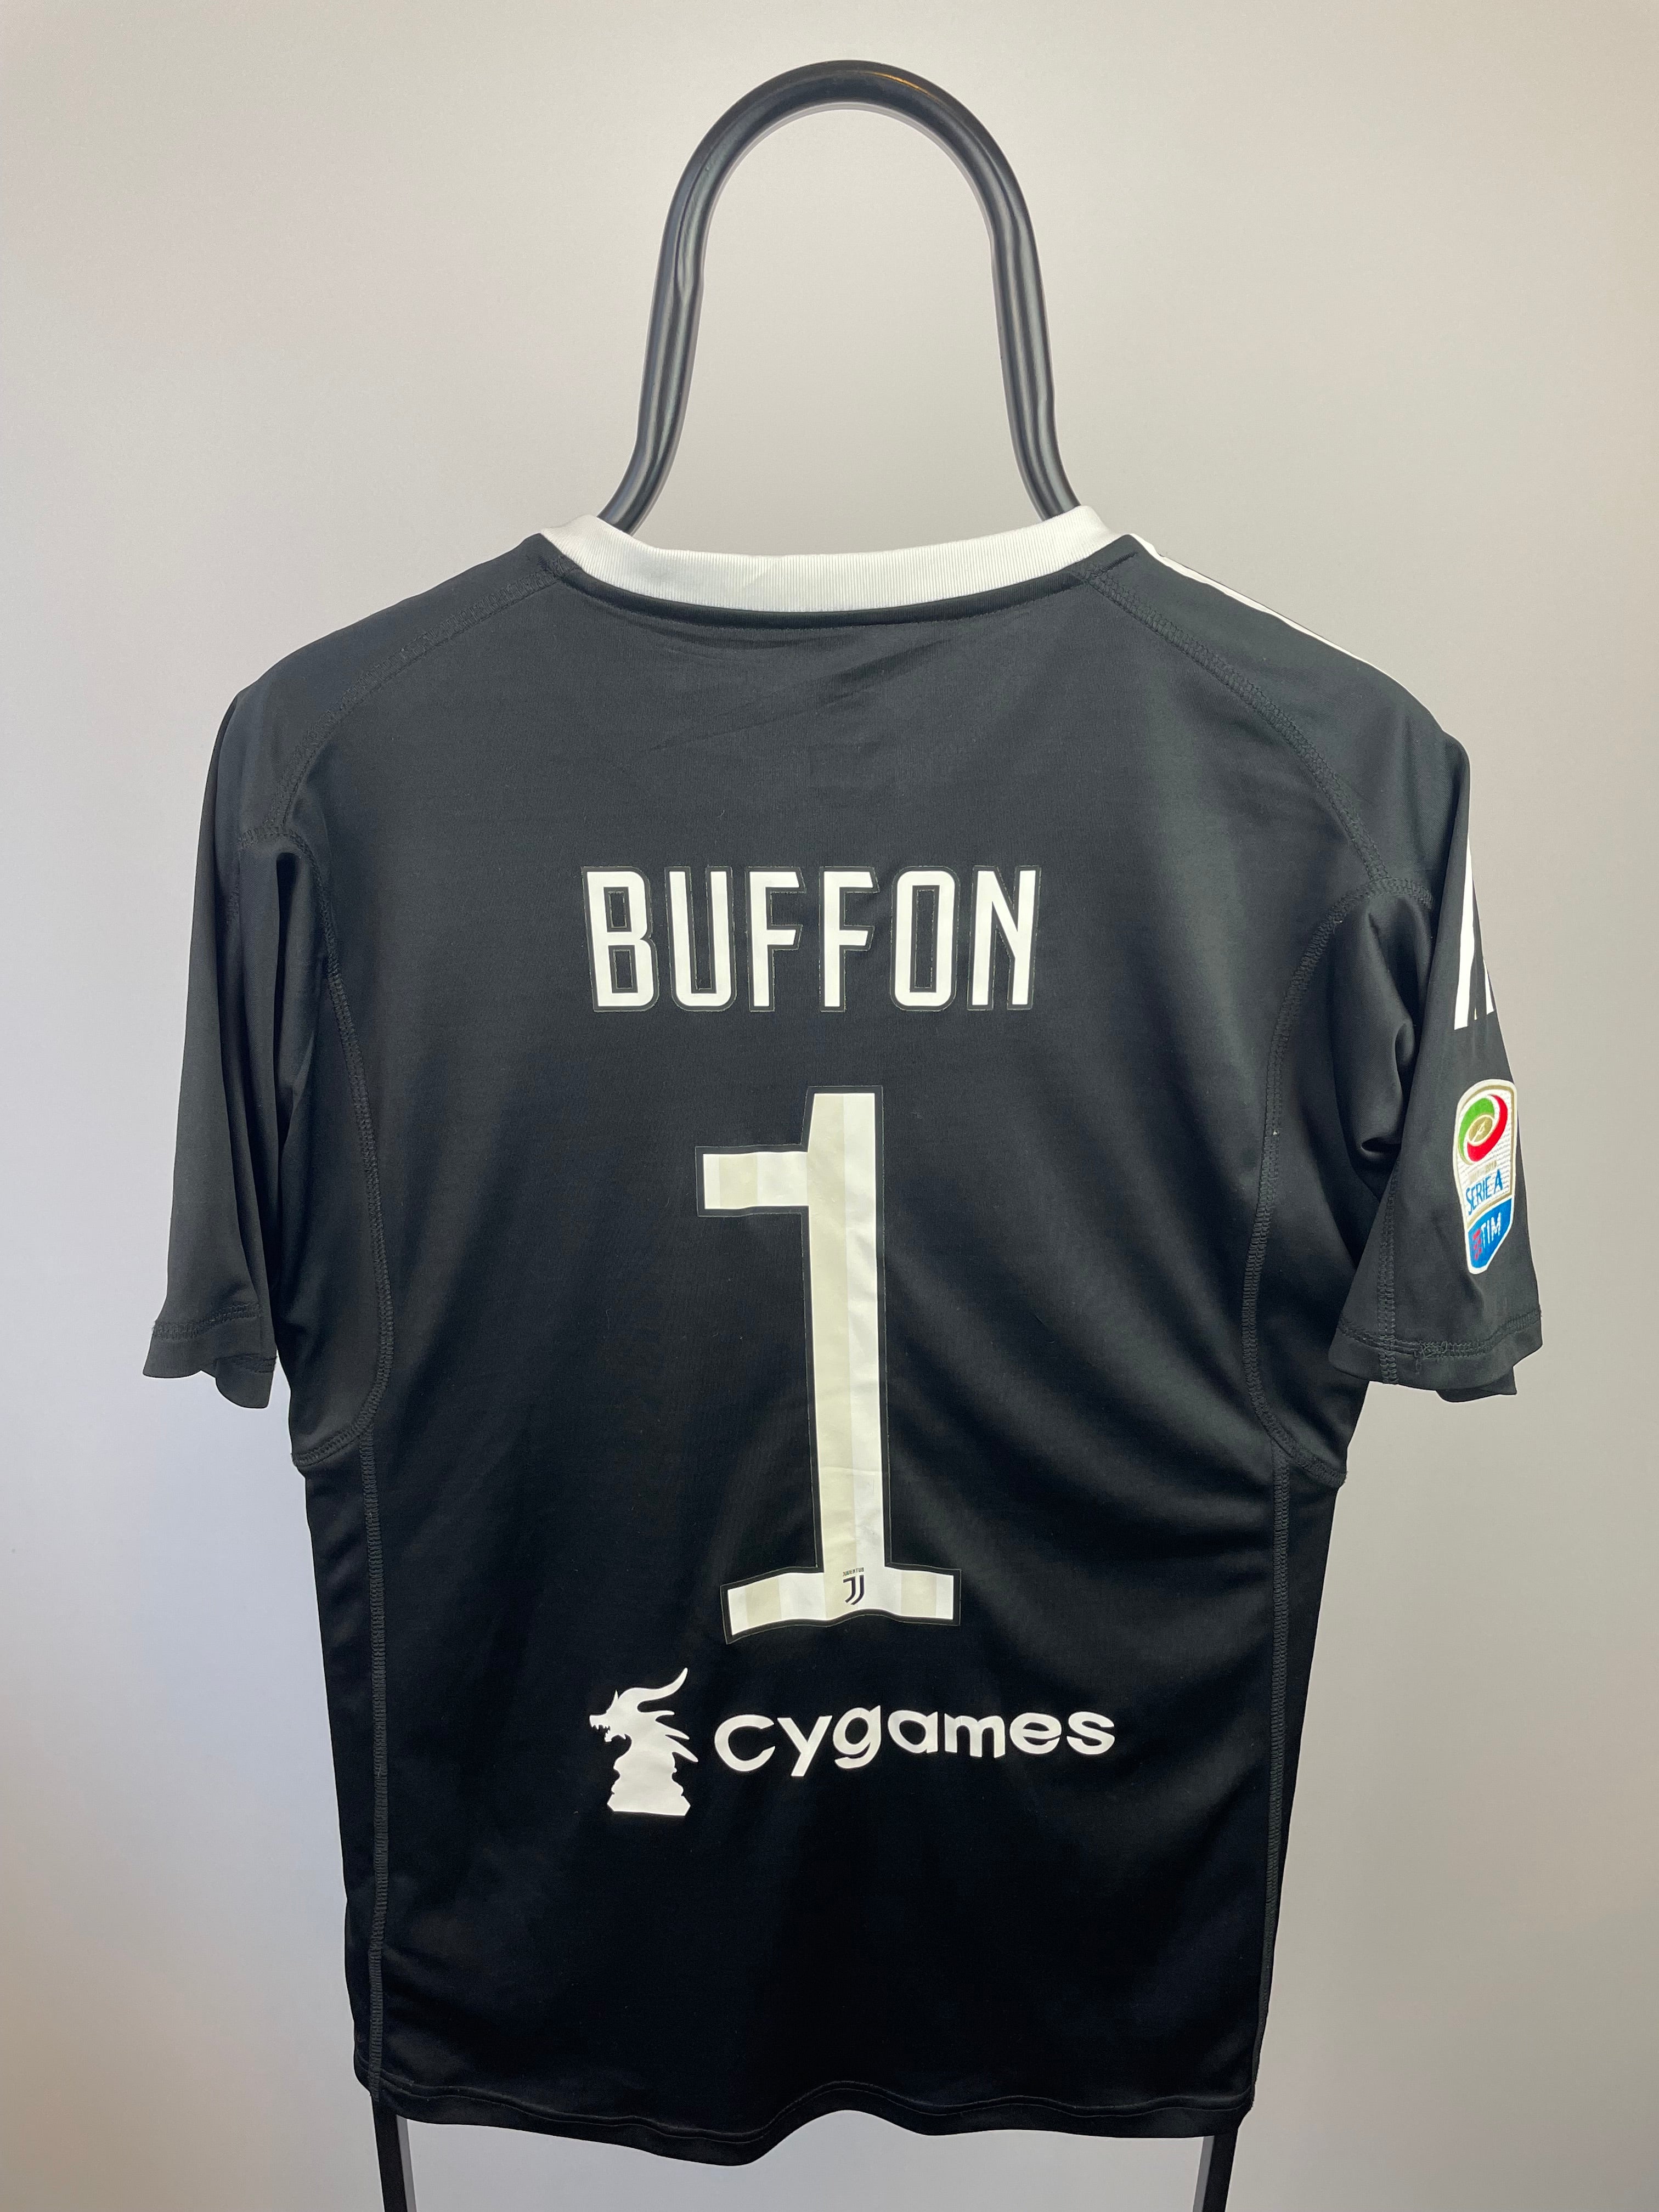 Buffon Juventus 17/18 målmandstrøje - M